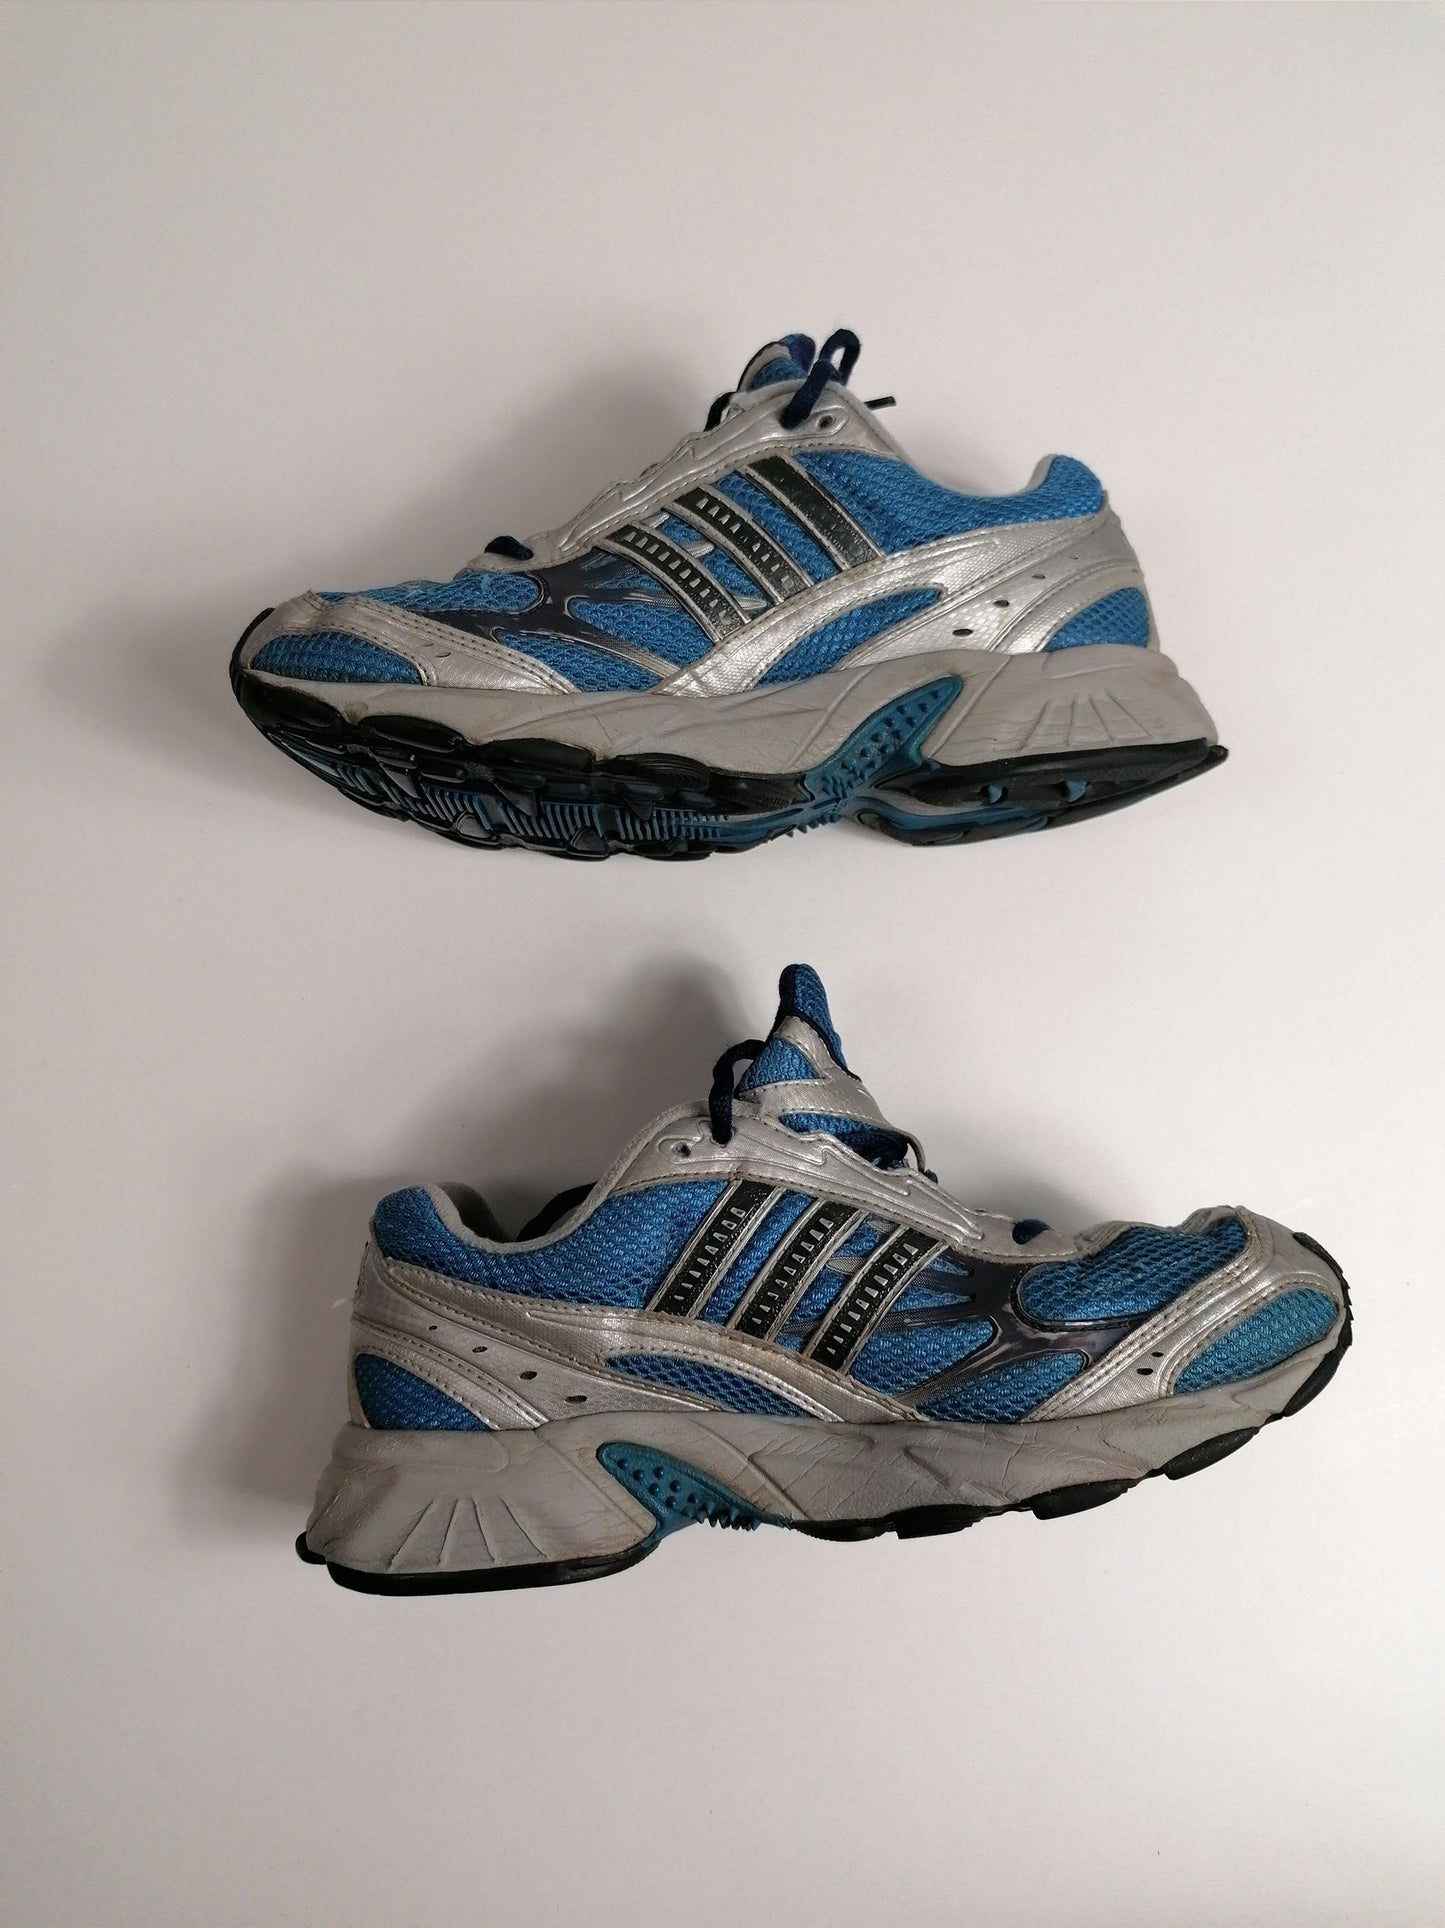 Y2K 2005 ADIDAS Silver Blue Running Shoes - size UK 7 / EU 40 2/3 / Us 8.5 / 255 cm